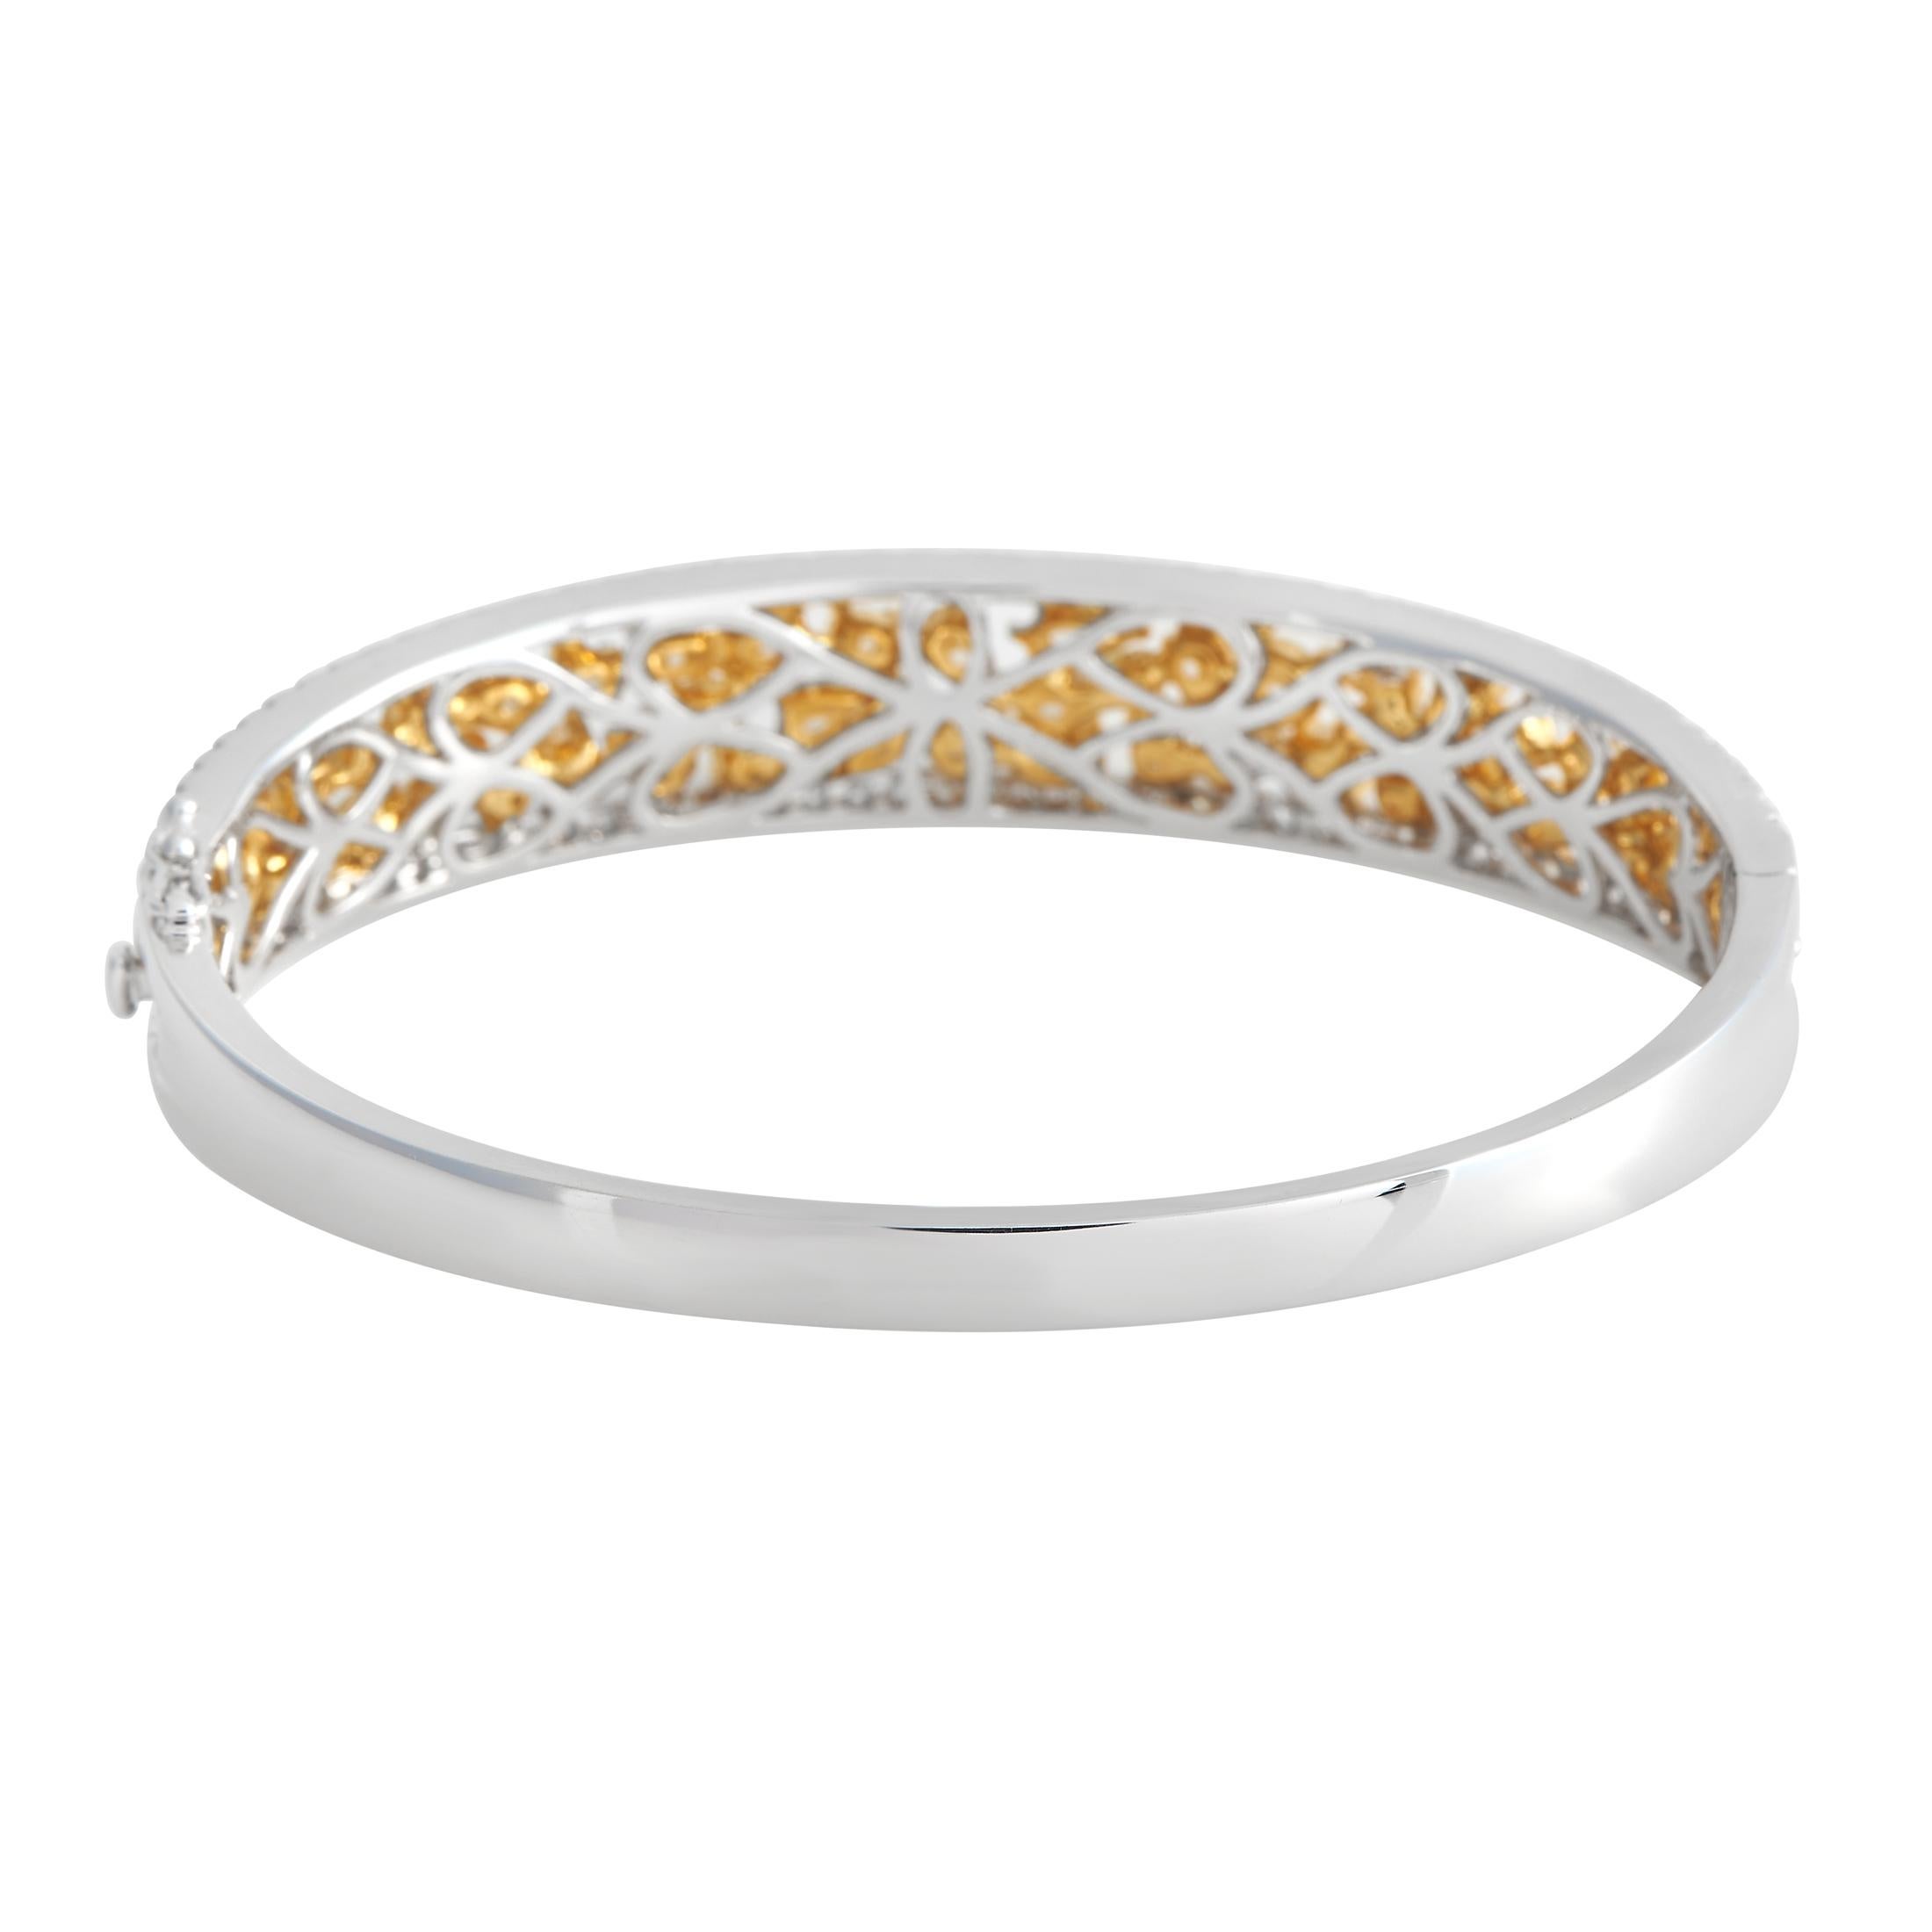 Round Cut LB Exclusive 18K White Gold 7.85 Ct Yellow and White Diamond Bangle Bracelet